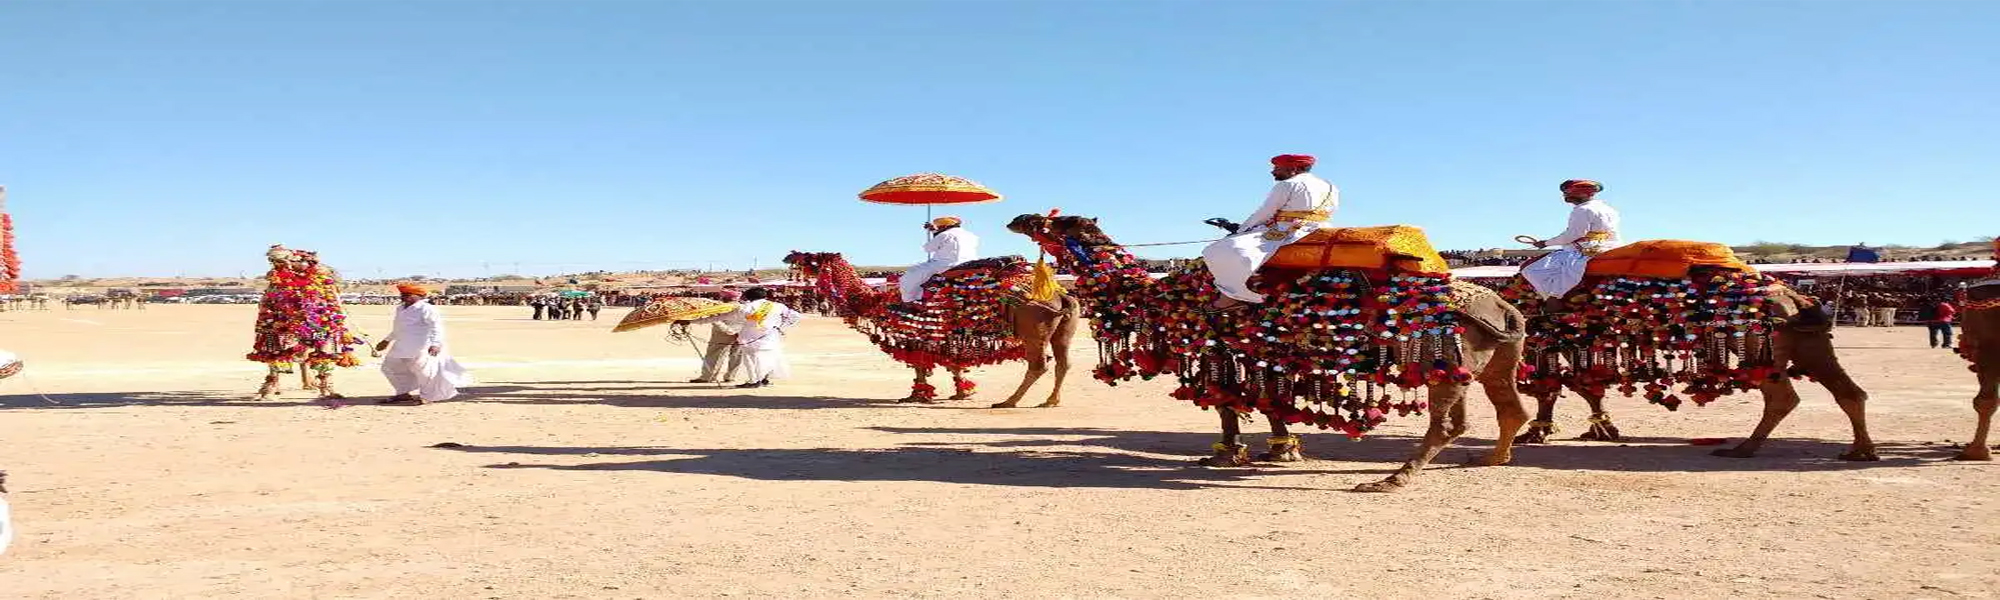 Camel Safari Tours in India with Pushkar Fair Tours in India